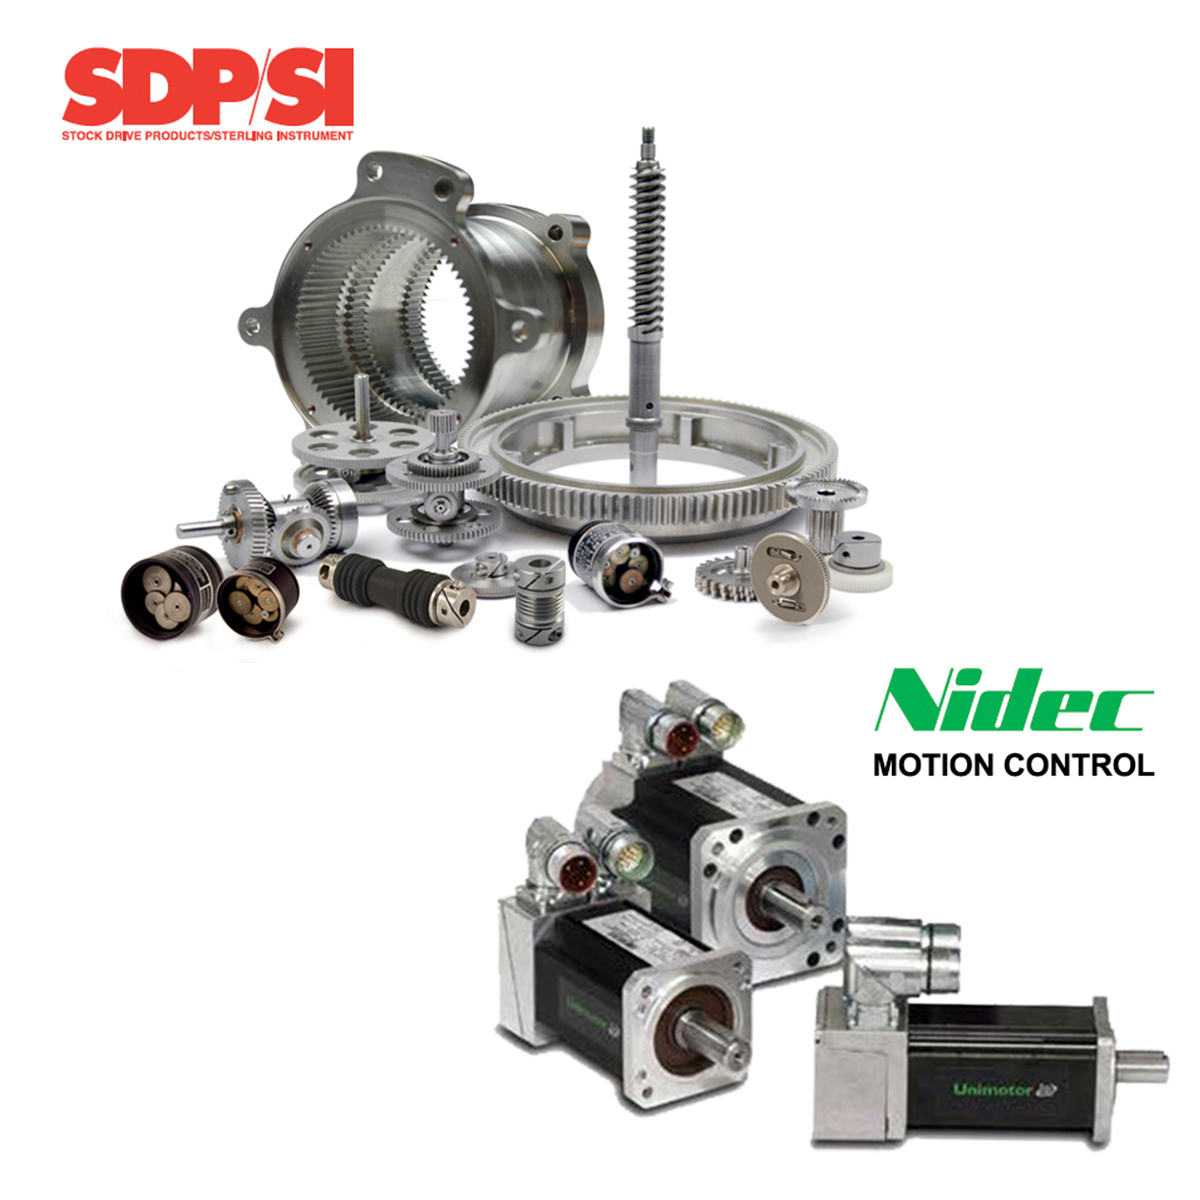 Mechatronics Made Easier - Distribution Partnership between Nidec Motion Control and SDP/SI